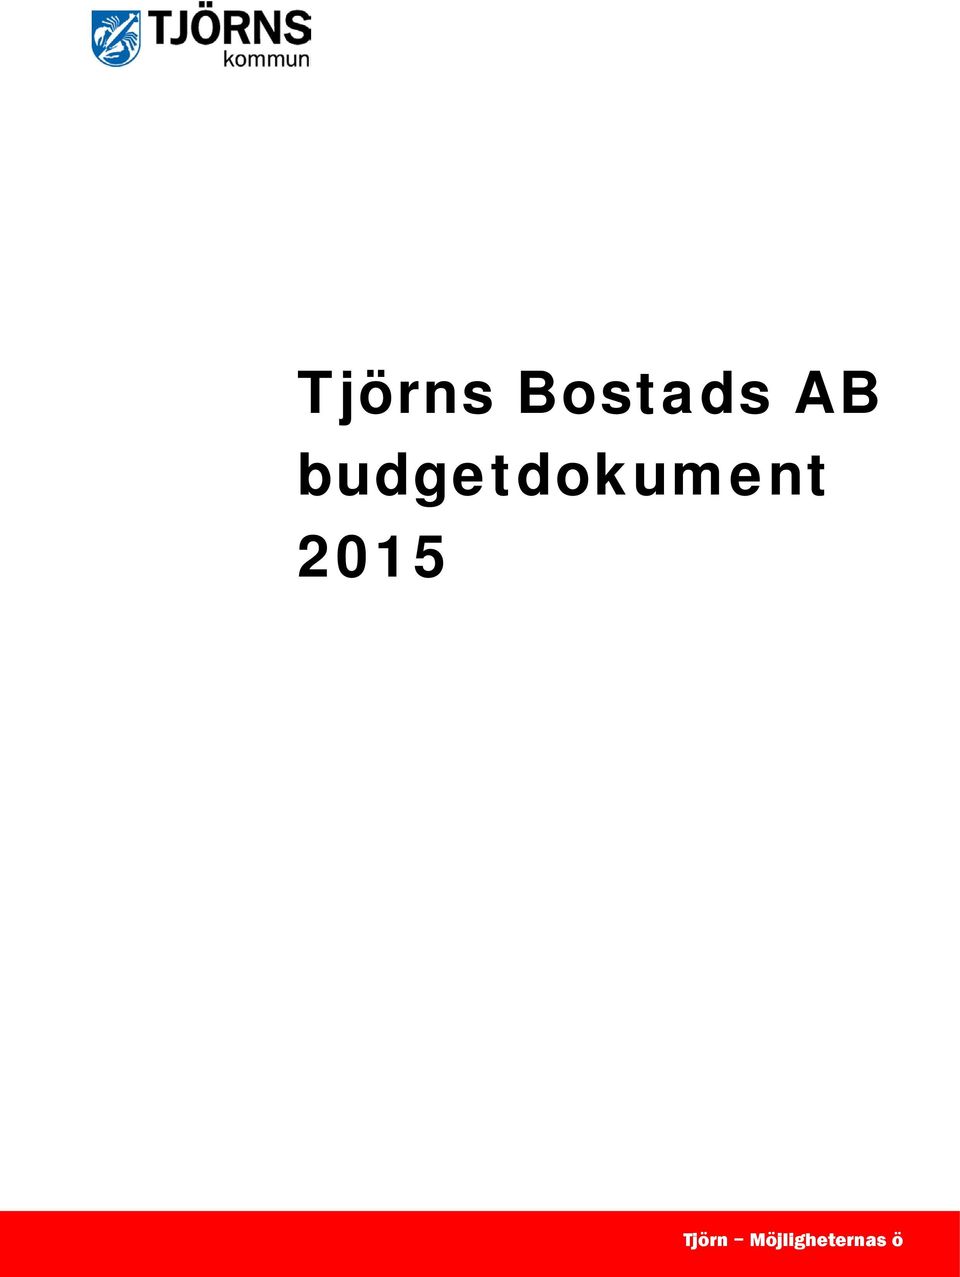 budgetdokument